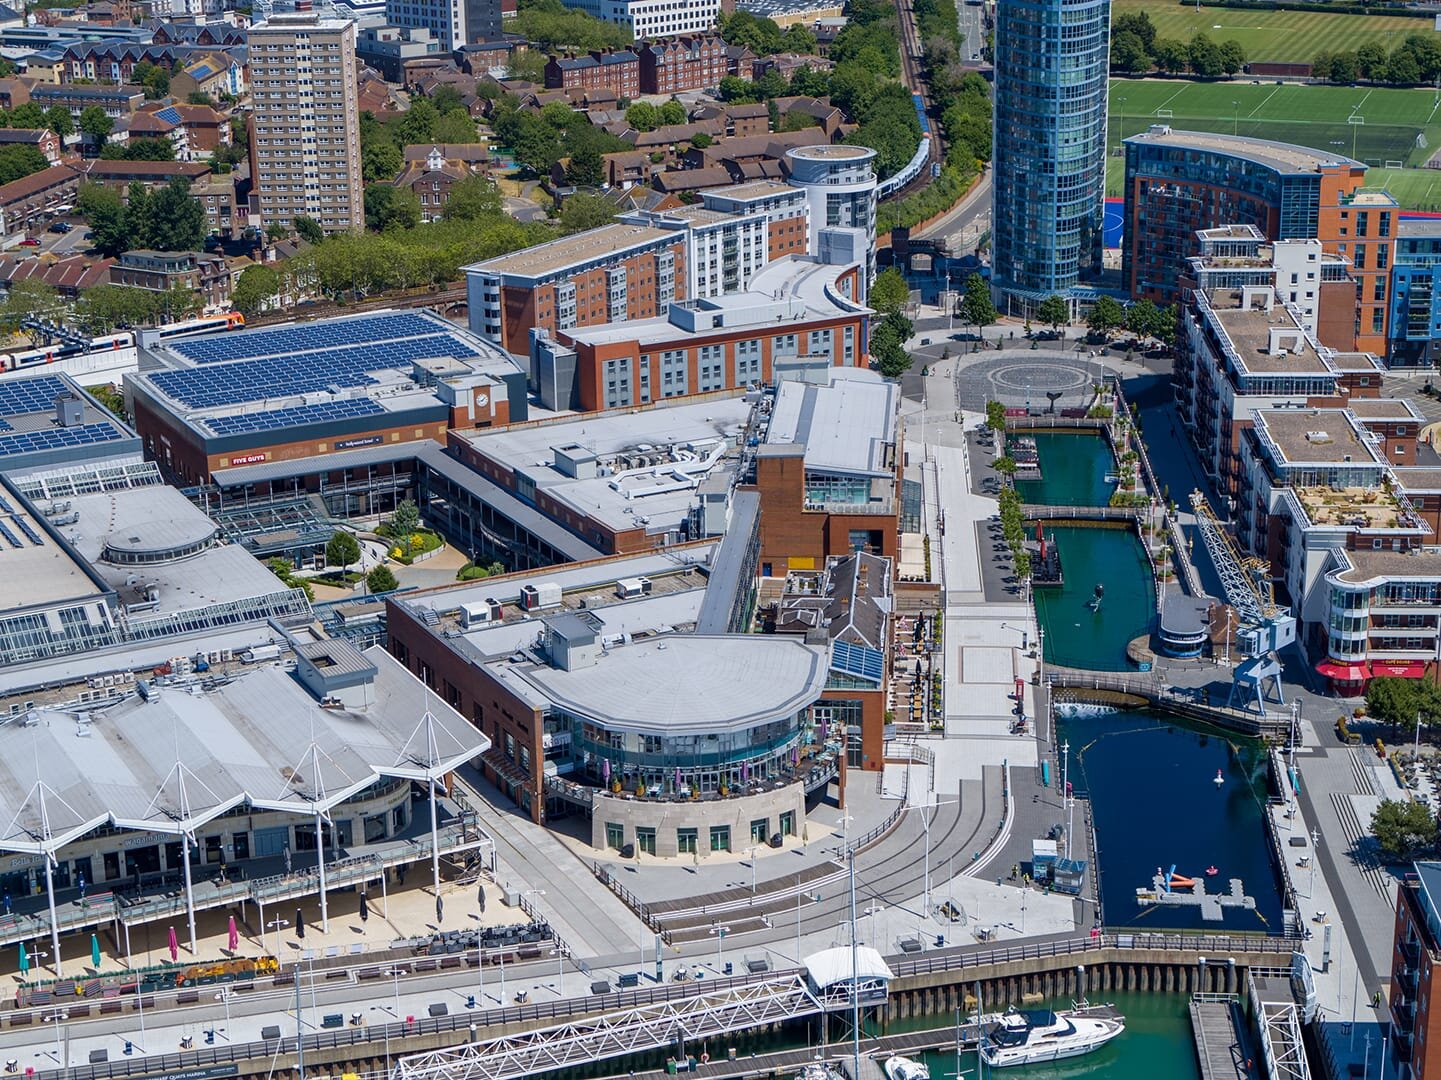 Gunwharf Quays reopens: drone photos show shopping centre's preparations